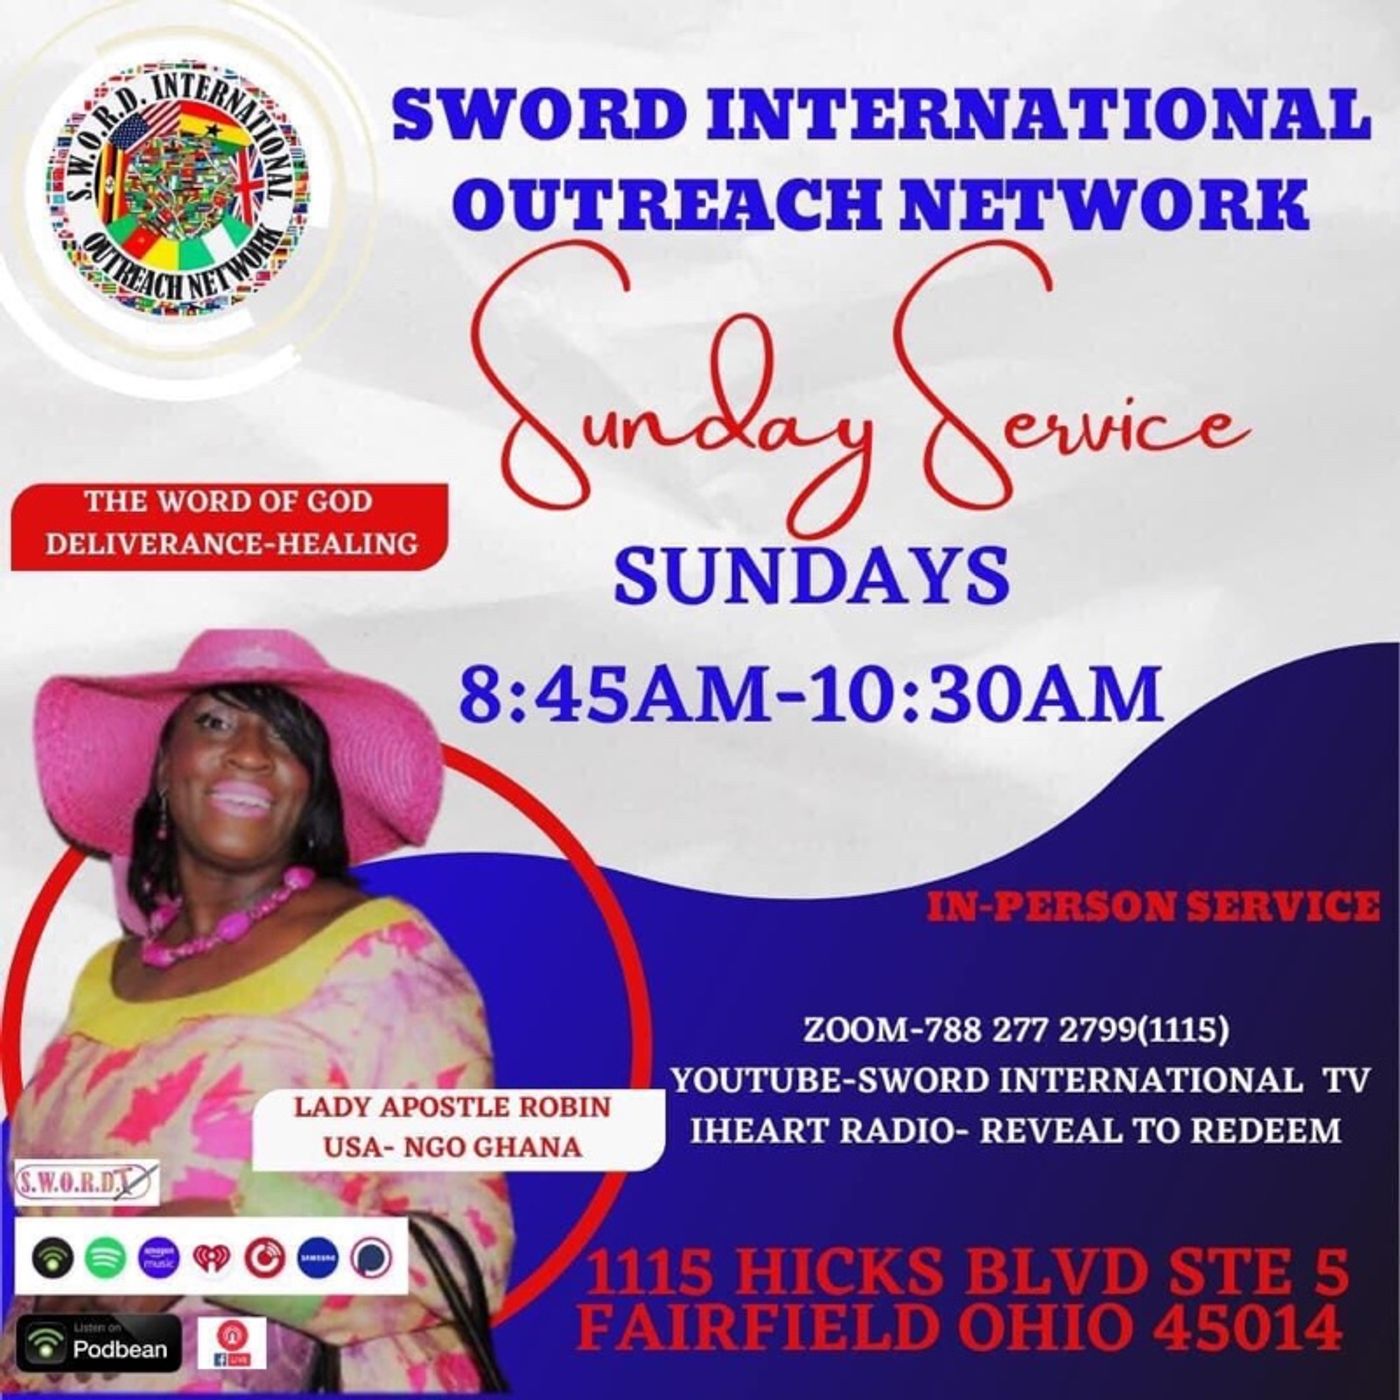 SWORD TV INTERNATIONAL NETWORK SUNDAY SERVICE LADY APOSTLE ROBIN